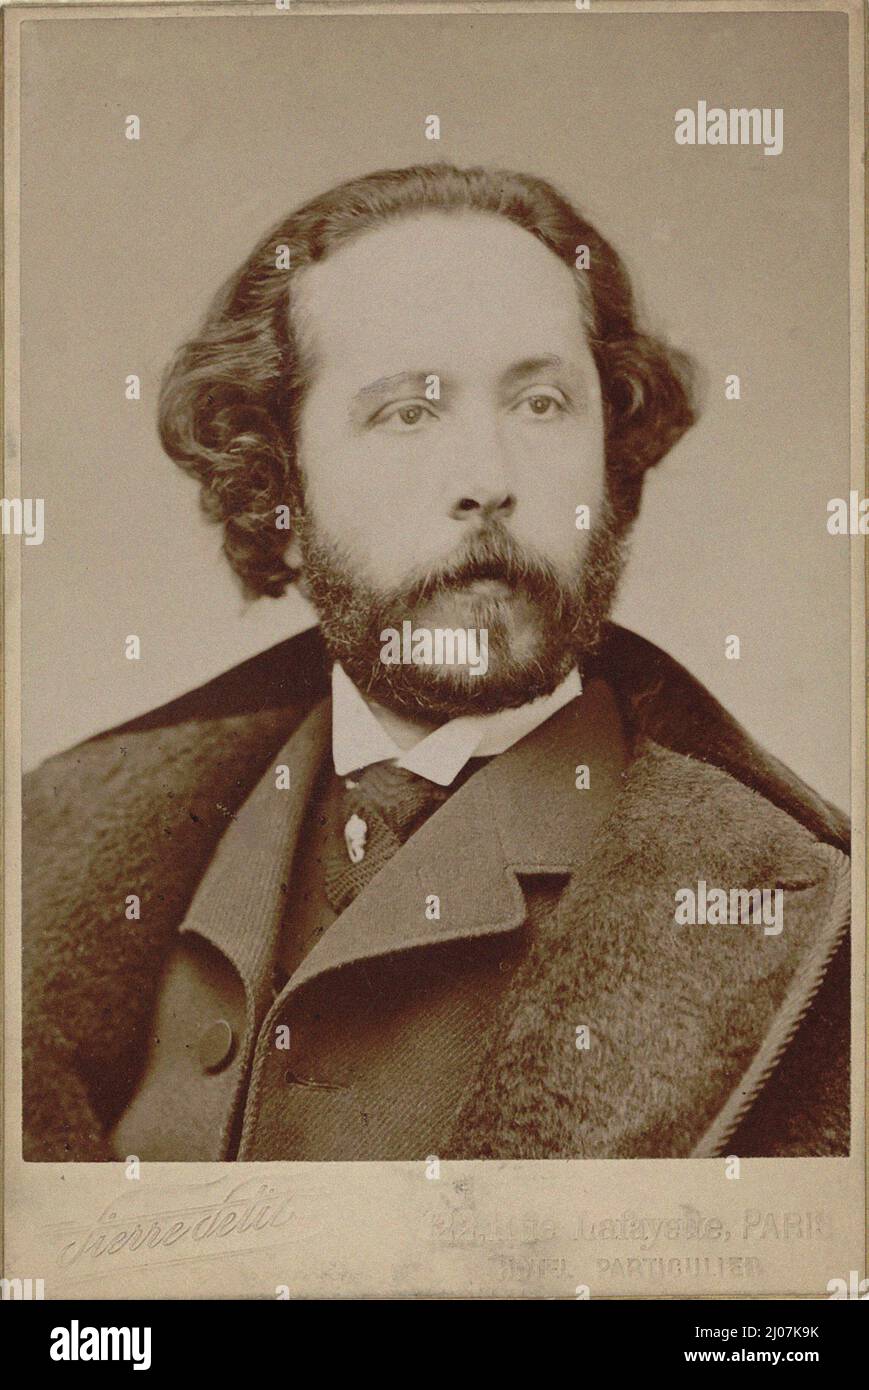 Portrait of the Composer Édouard Lalo (1823-1892). Museum: PRIVATE COLLECTION. Author: PIERRE PETIT. Stock Photo